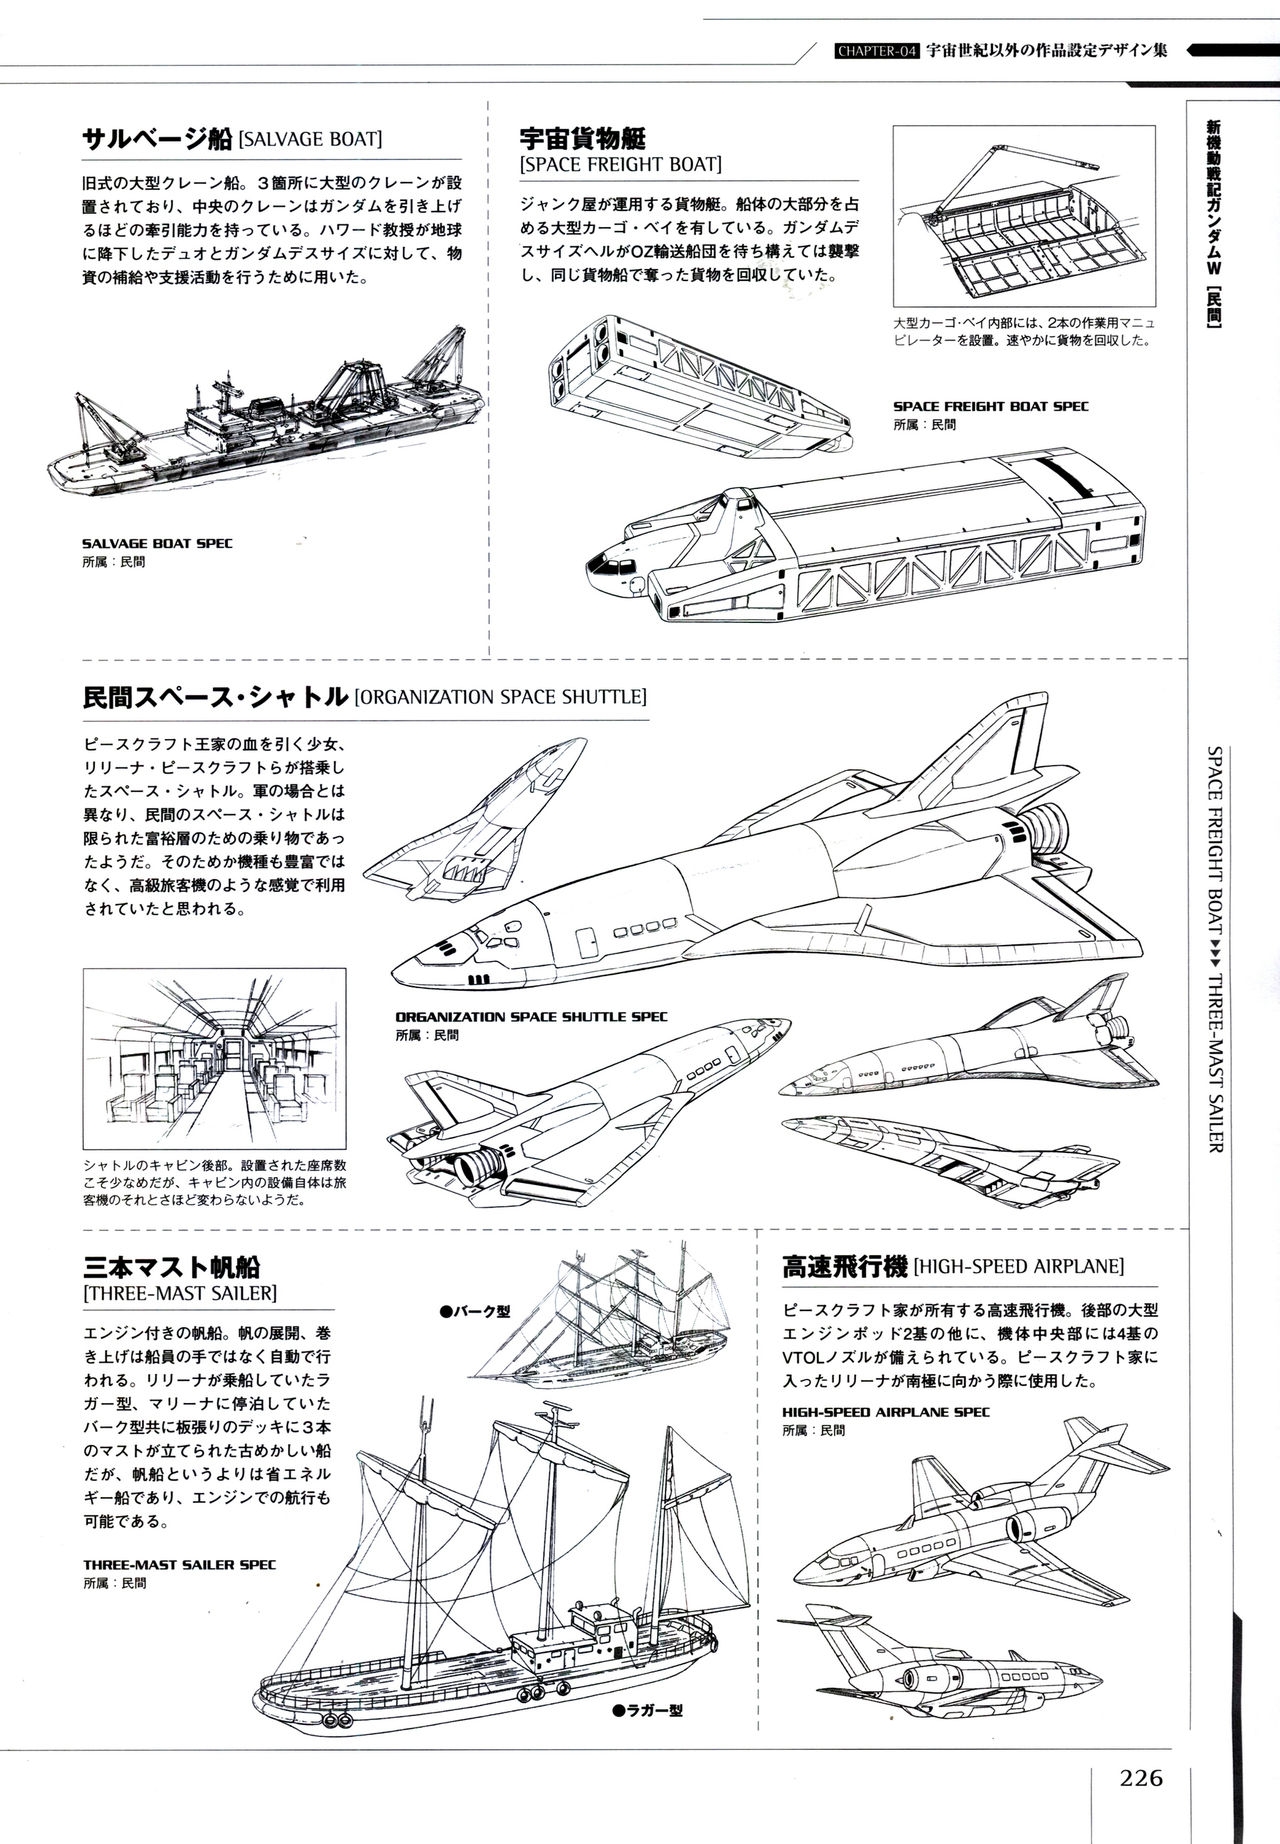 Mobile Suit Gundam - Ship & Aerospace Plane Encyclopedia - Revised Edition 231